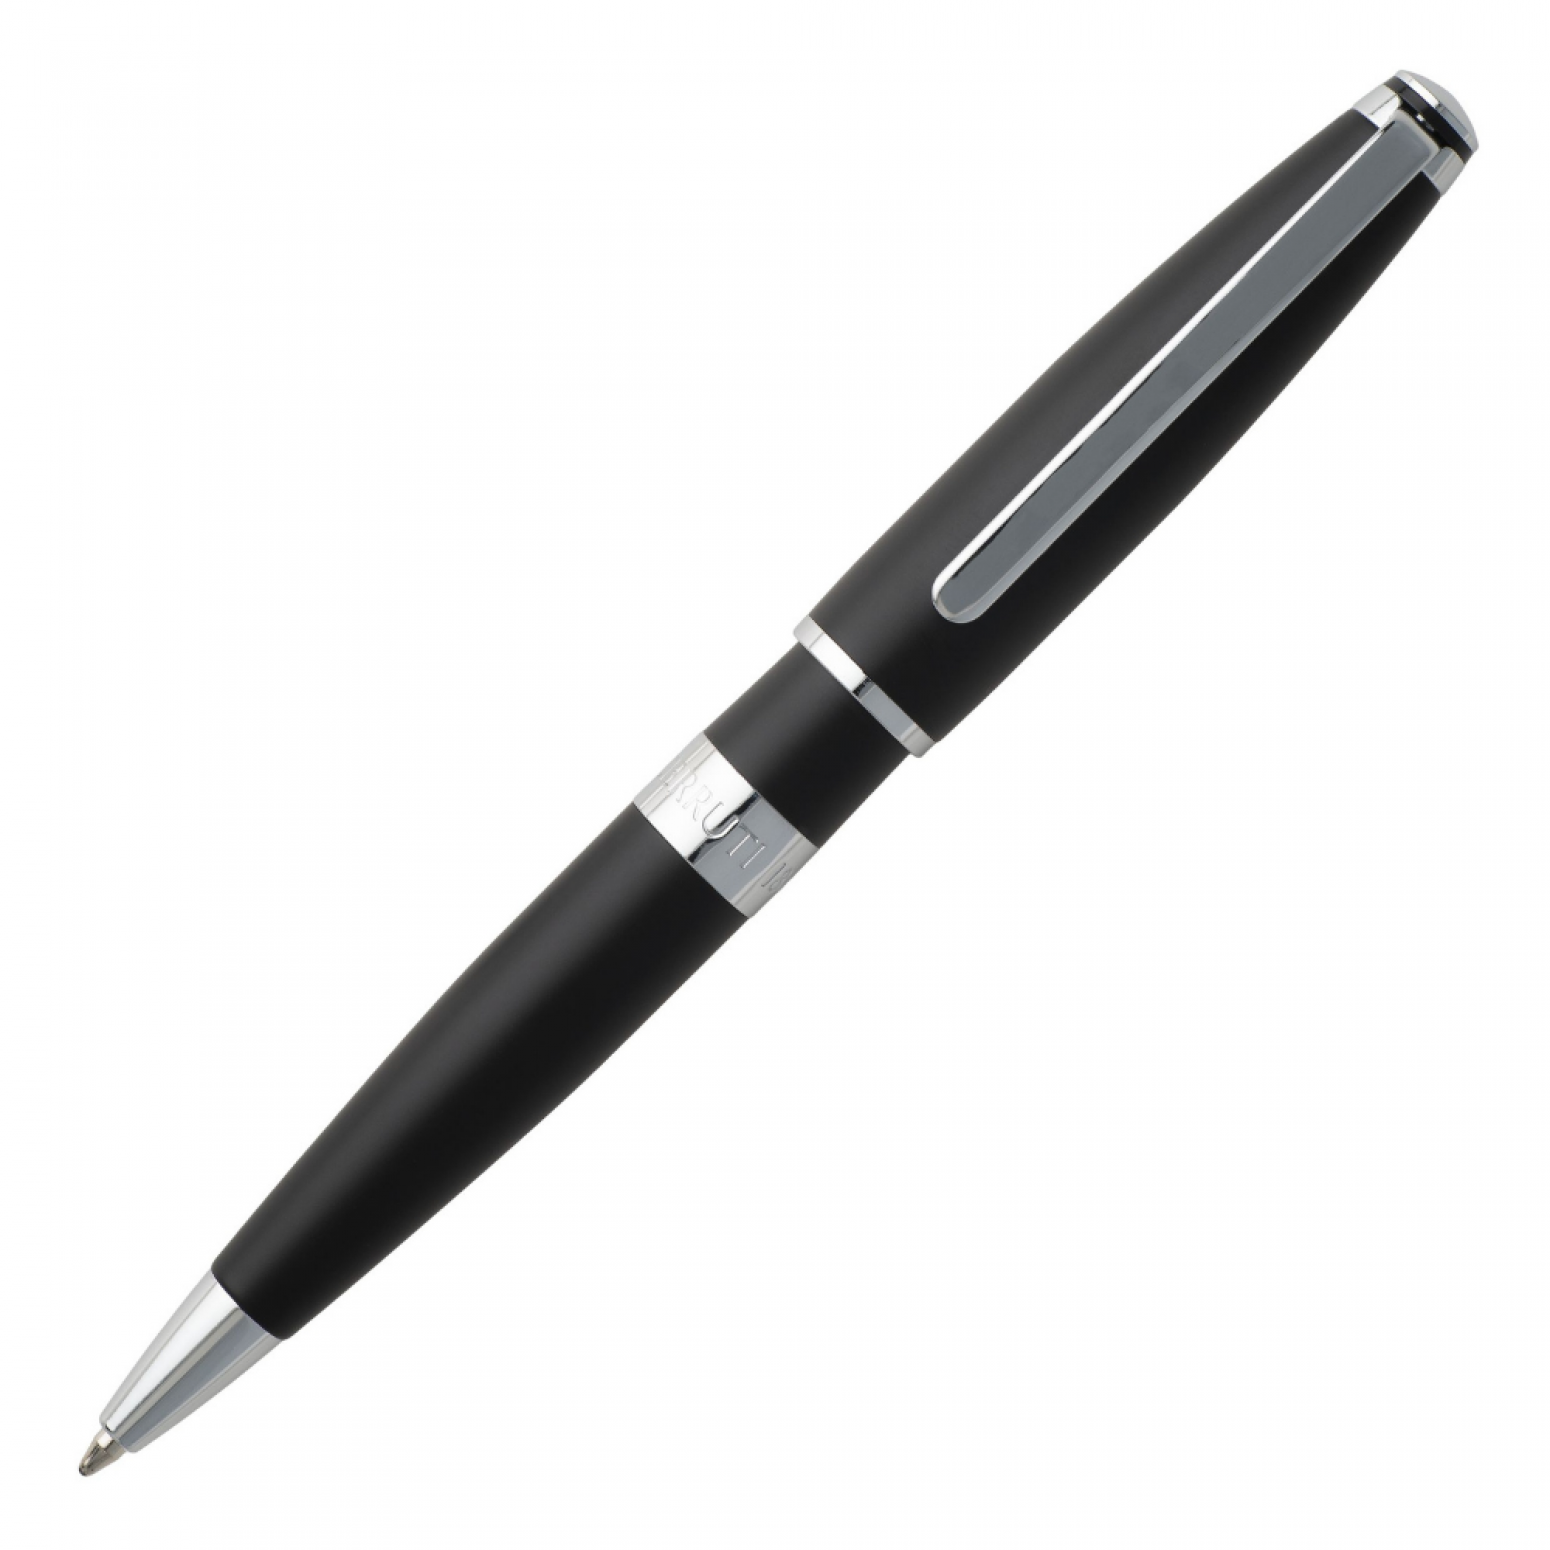 Cerruti 1881 ballpoint στυλό, Bicolore Black NSR9904A, ac1231 ΔΩΡΑ Κοσμηματα - chrilia.gr